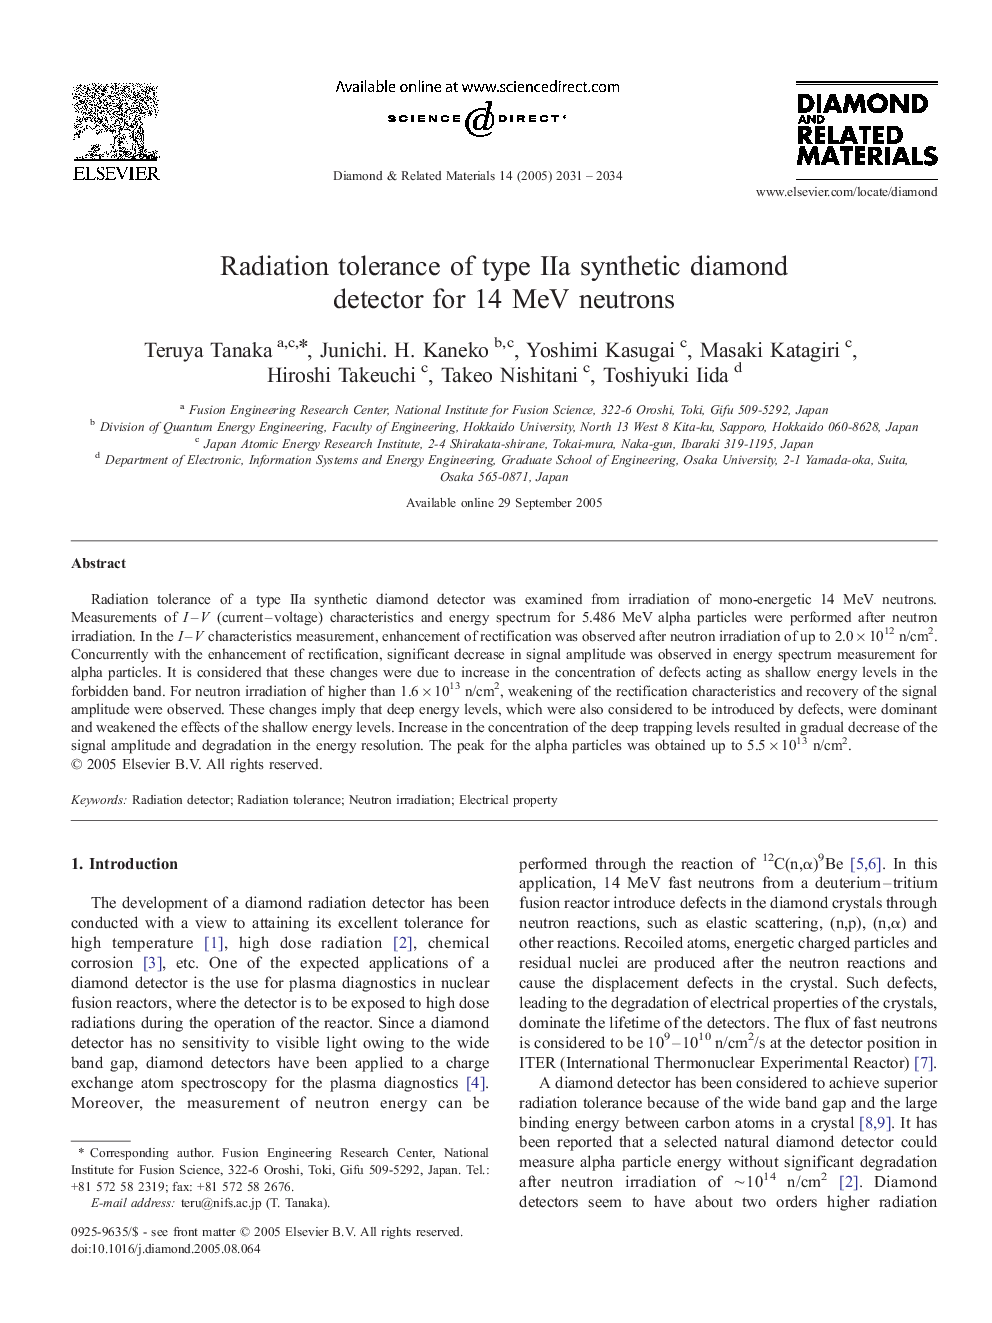 Radiation tolerance of type IIa synthetic diamond detector for 14 MeV neutrons